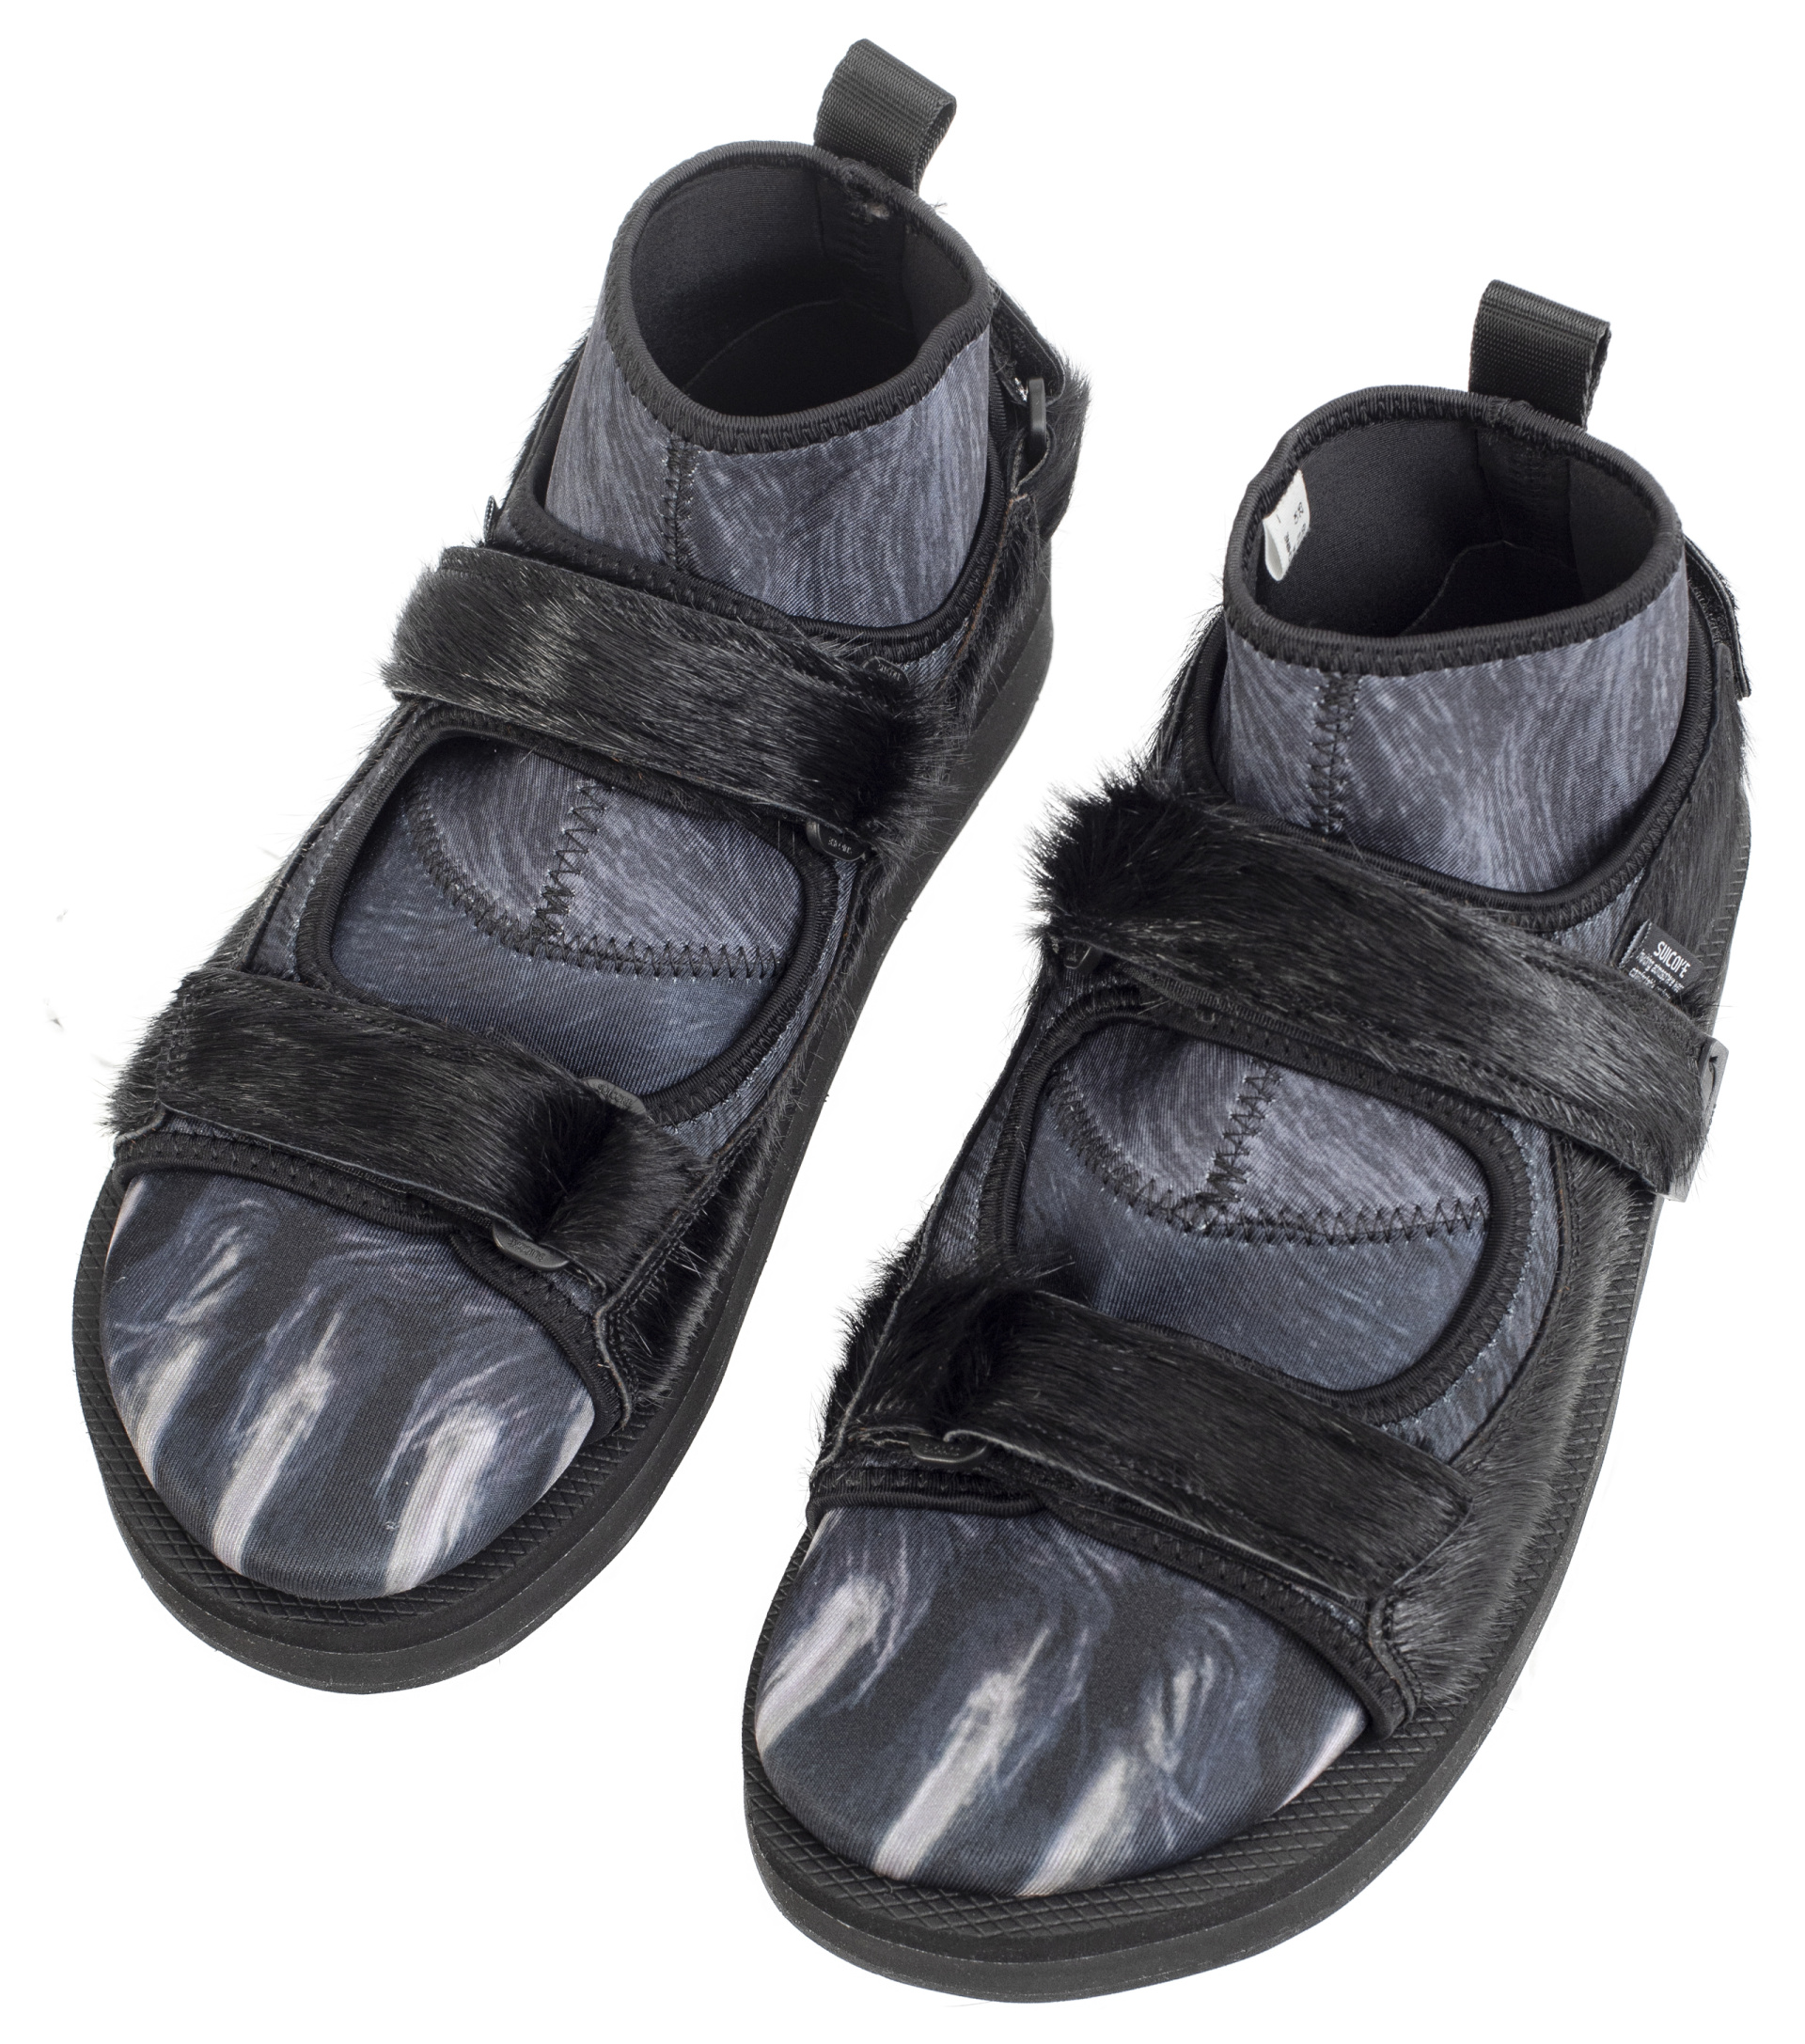 Doublet Doublet x Suicoke Animal foot Bear Sandals